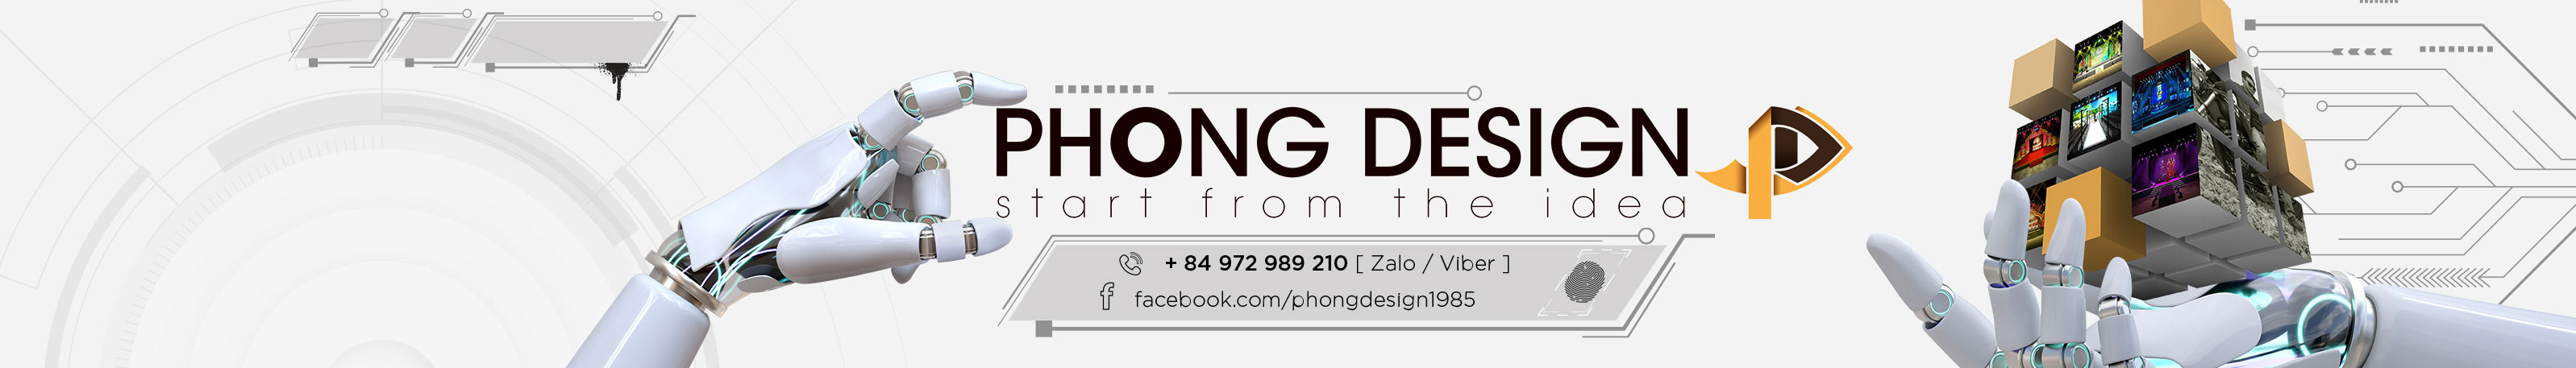 phongdesign 85's profile banner